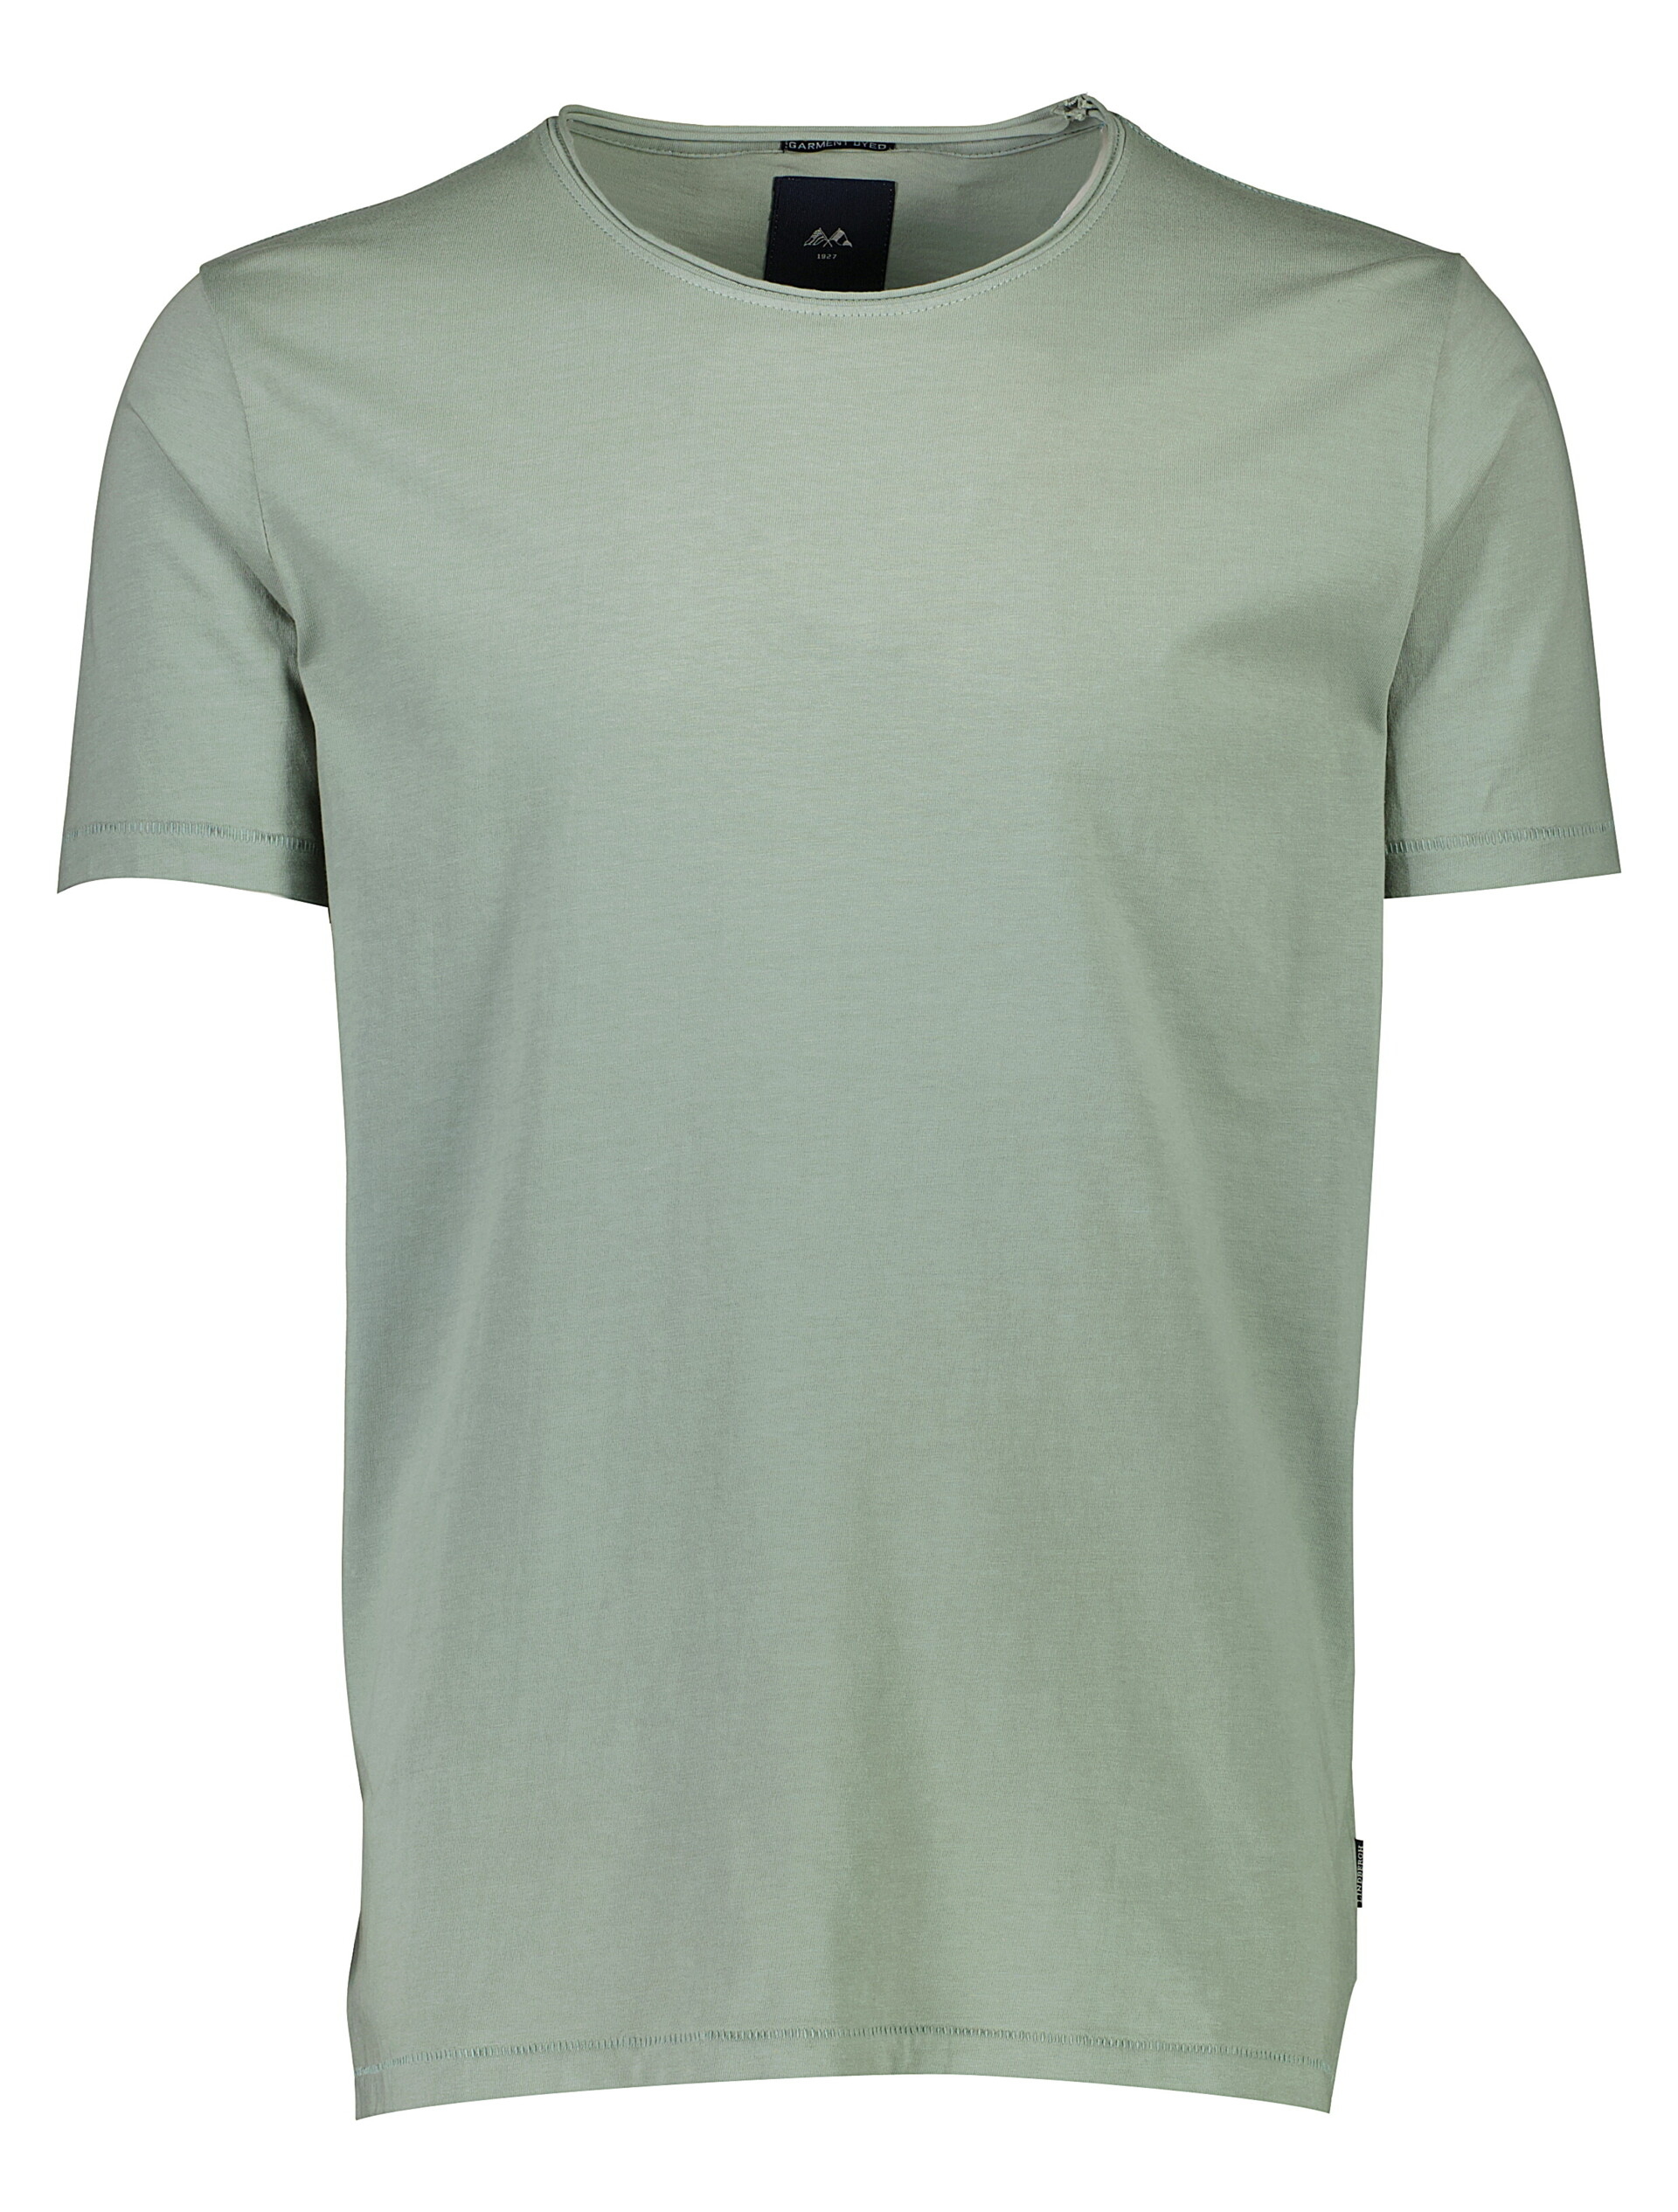 Lindbergh T-shirt grün / mint